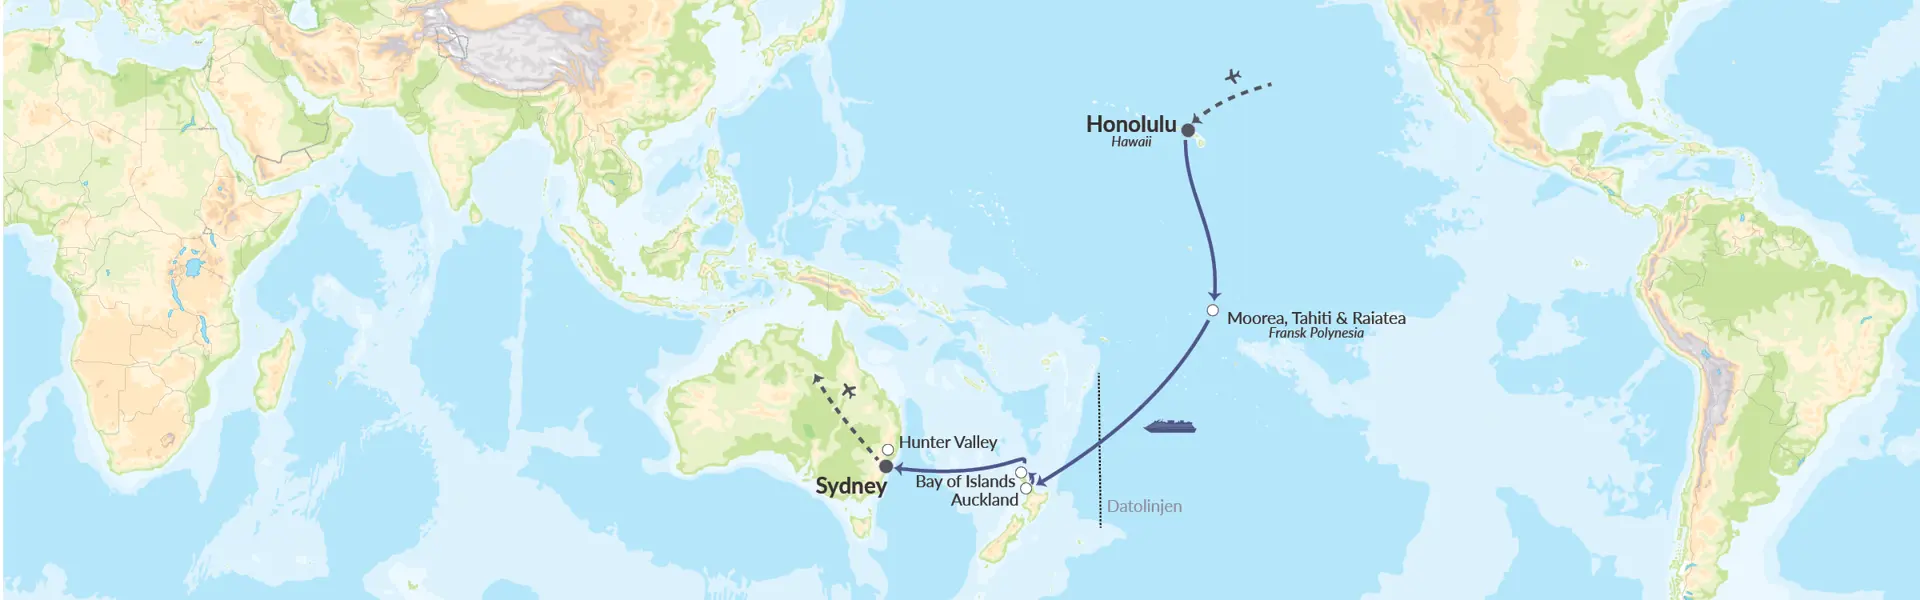 NO Fra Hawaii Via Fransk Polynesia Til Sydney (3)